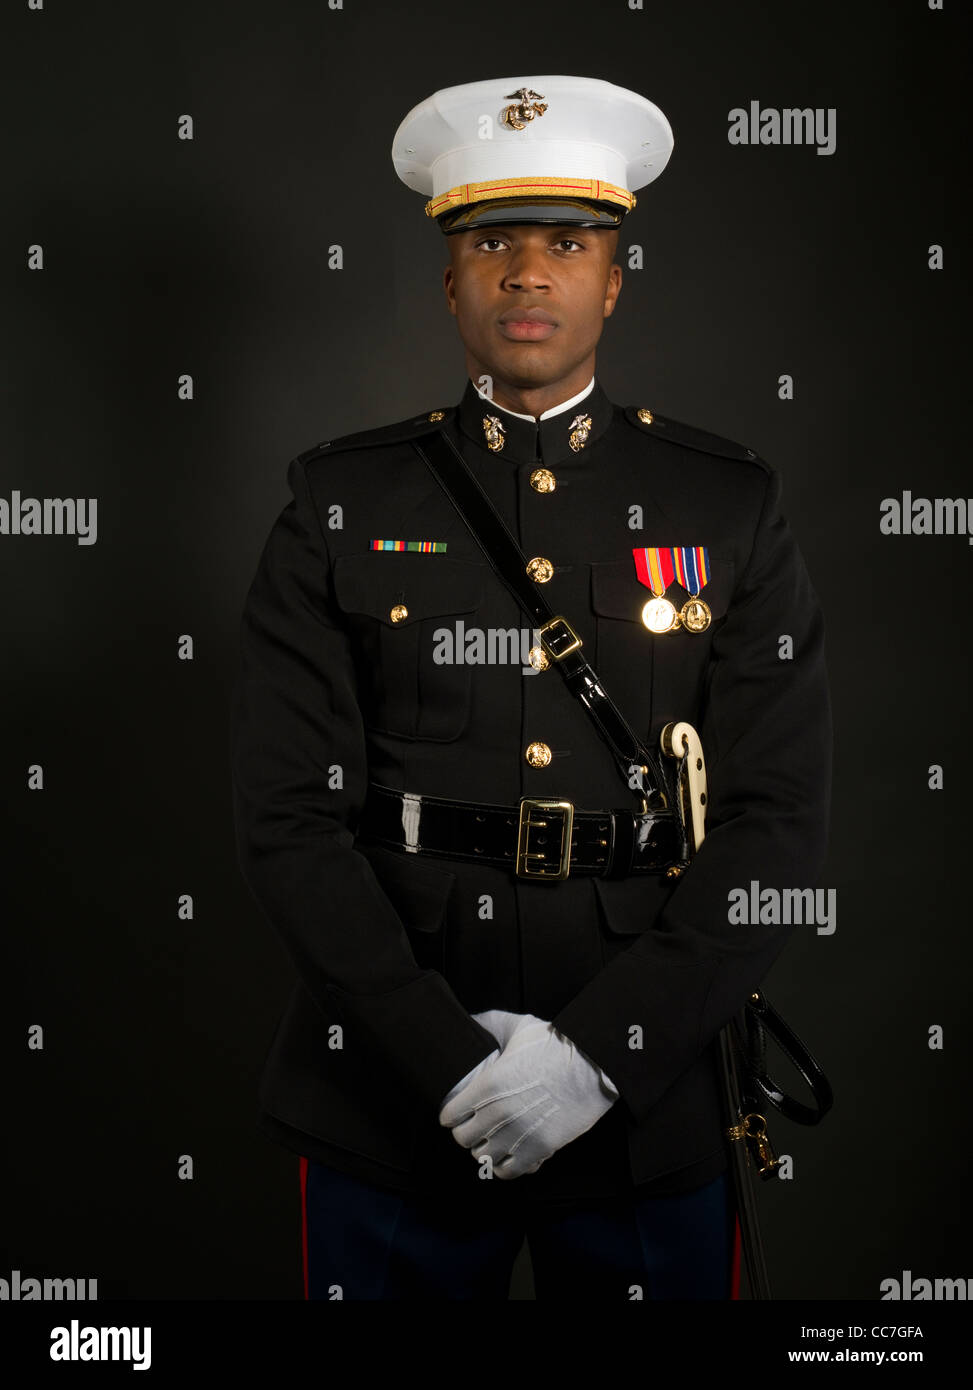 Marine Dress Blues Uniform 89